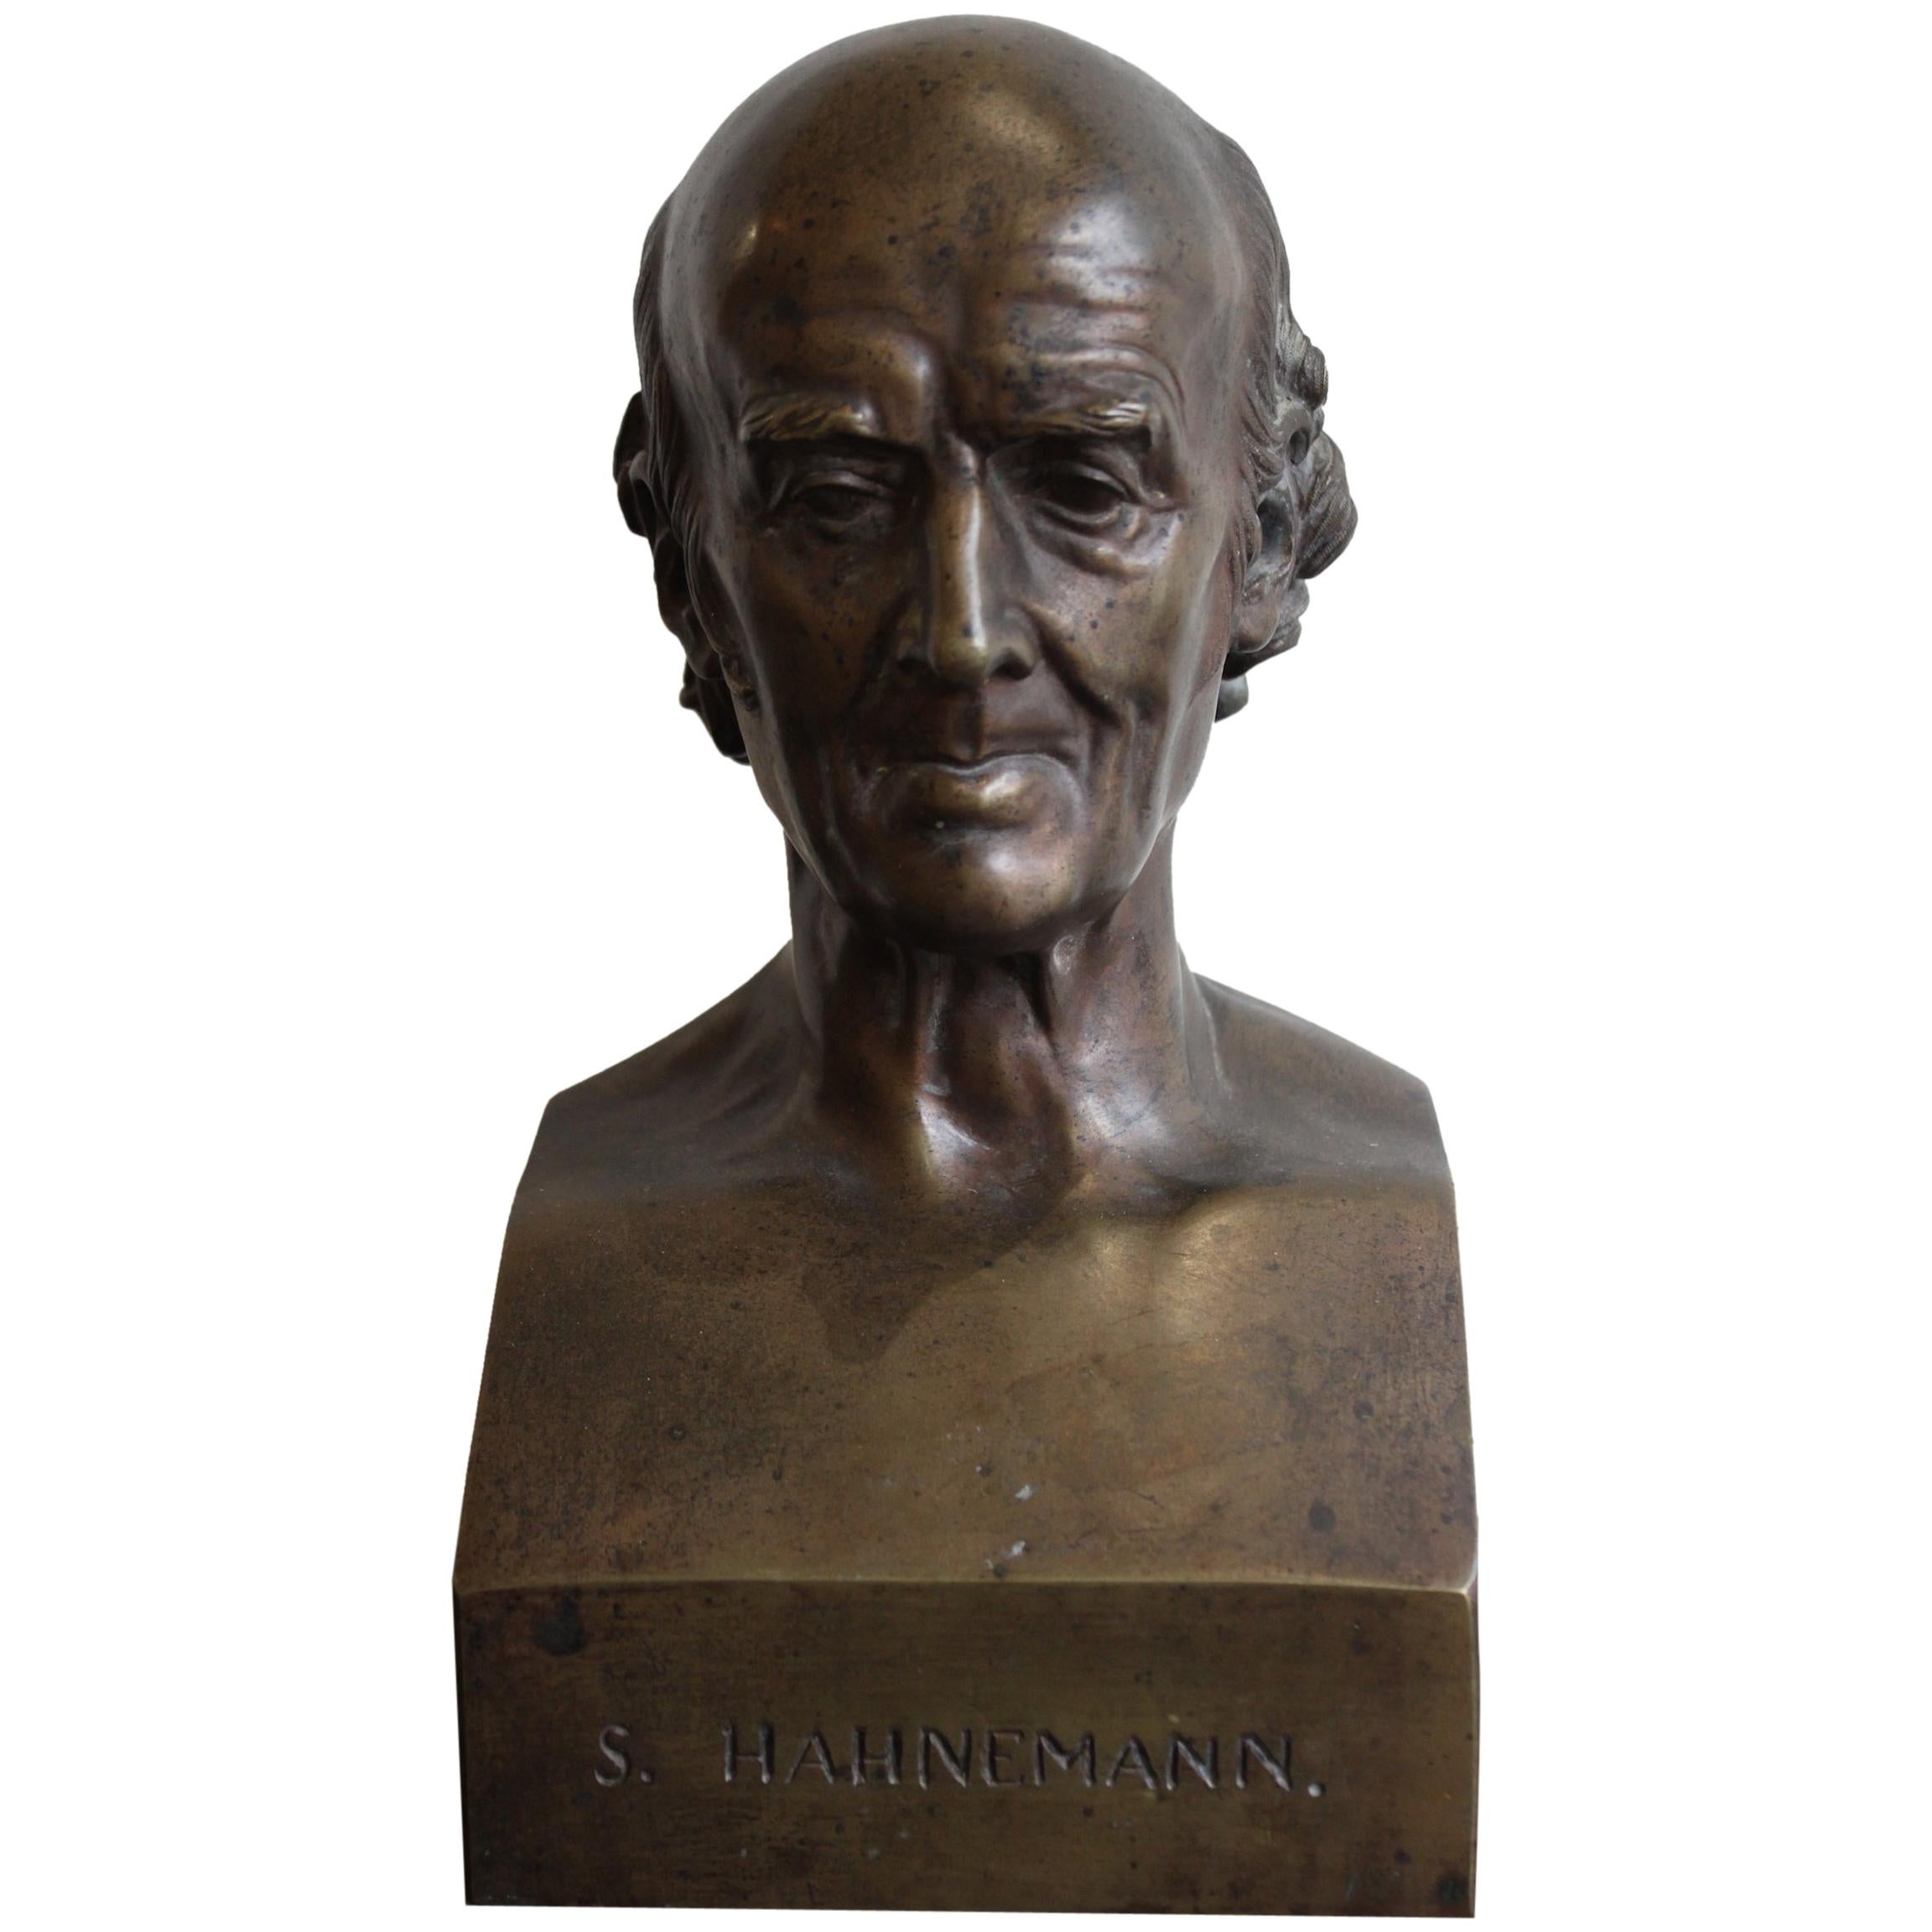 Bronze of Samuel Hahnemann by David d'Angers, 1837